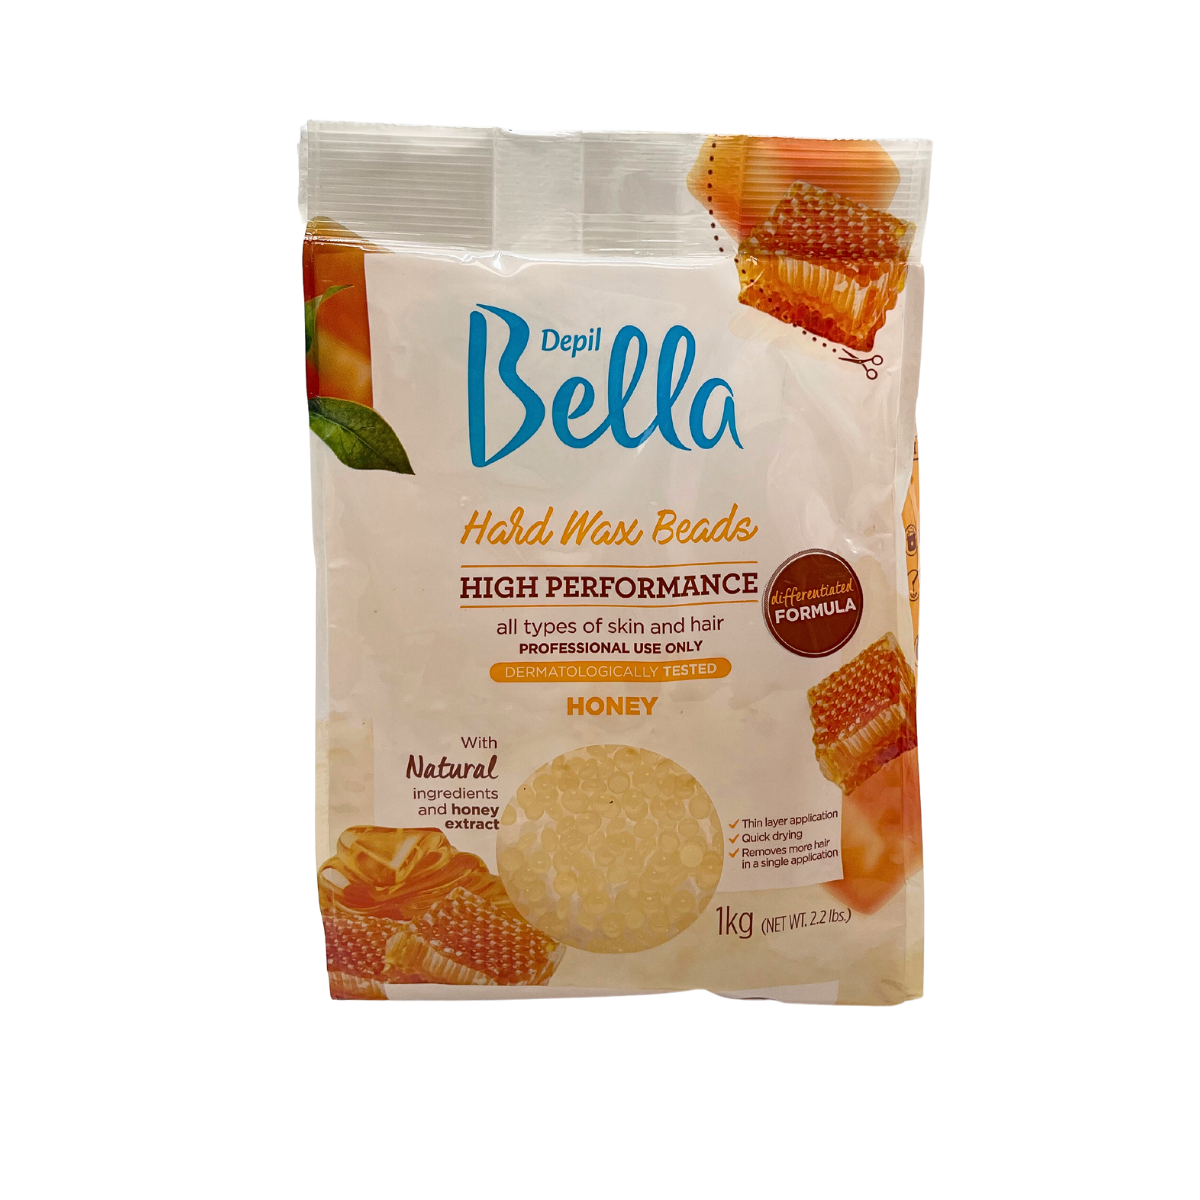 Depil Bella Hard Wax Beads Honey - Professional Hair Removal, 2.2 lbs